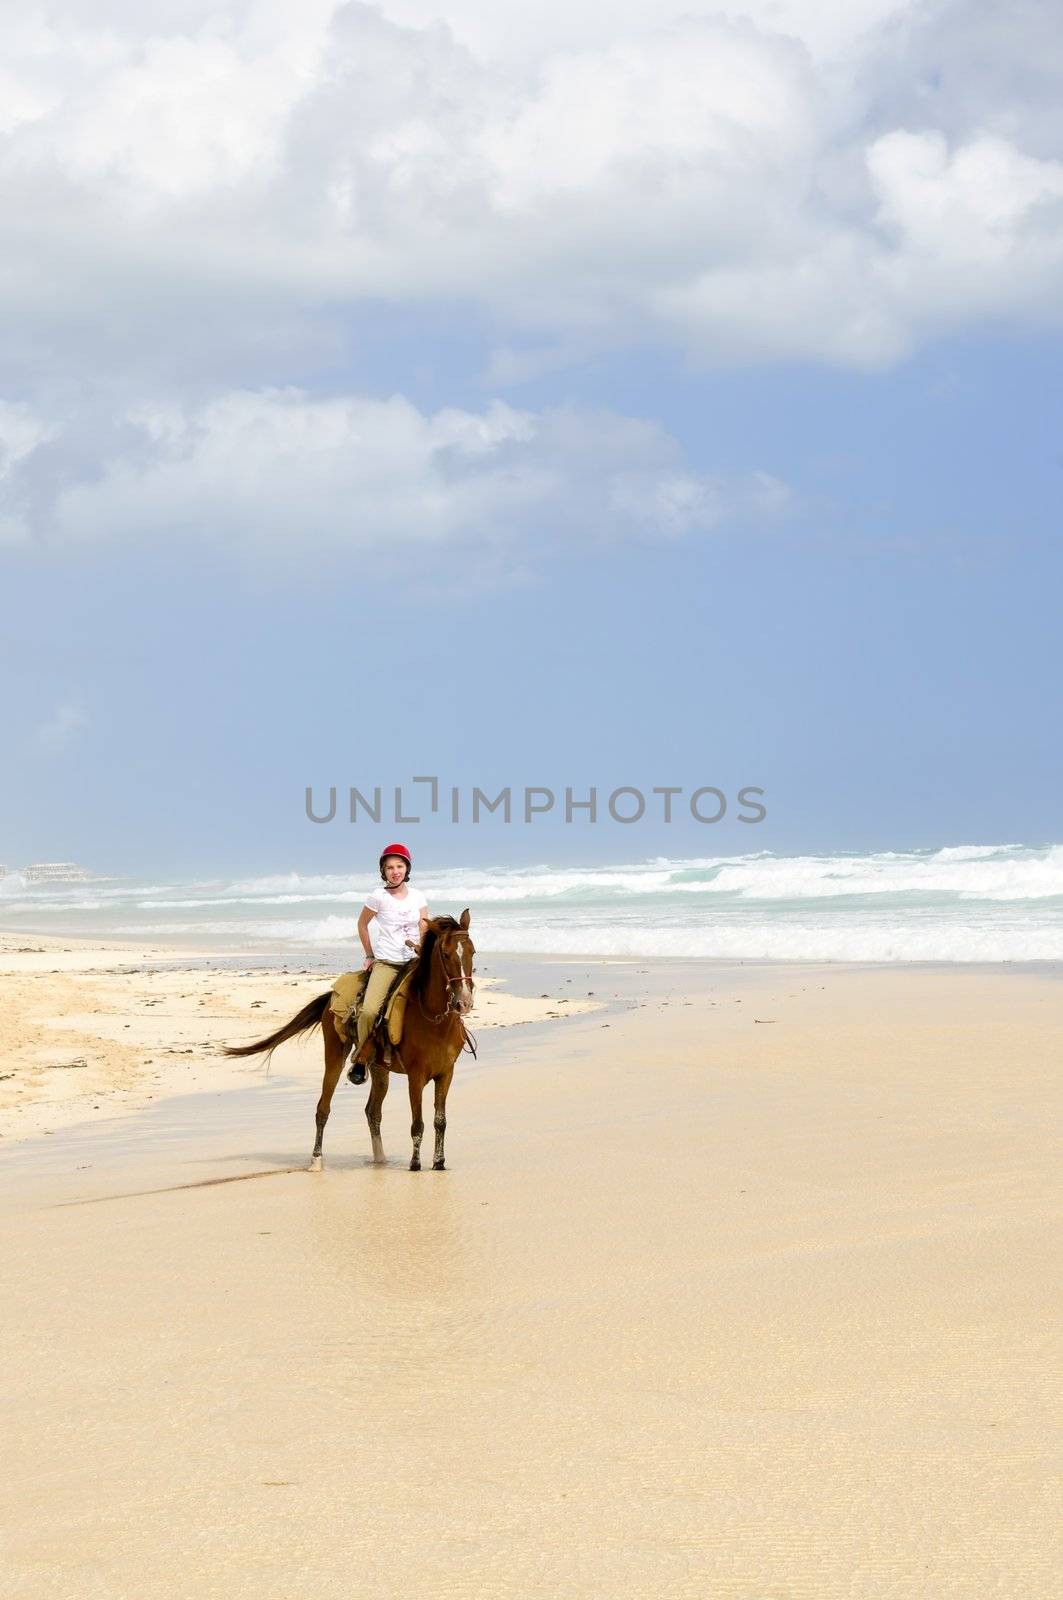 Young girl horseback riding on Caribbean beach